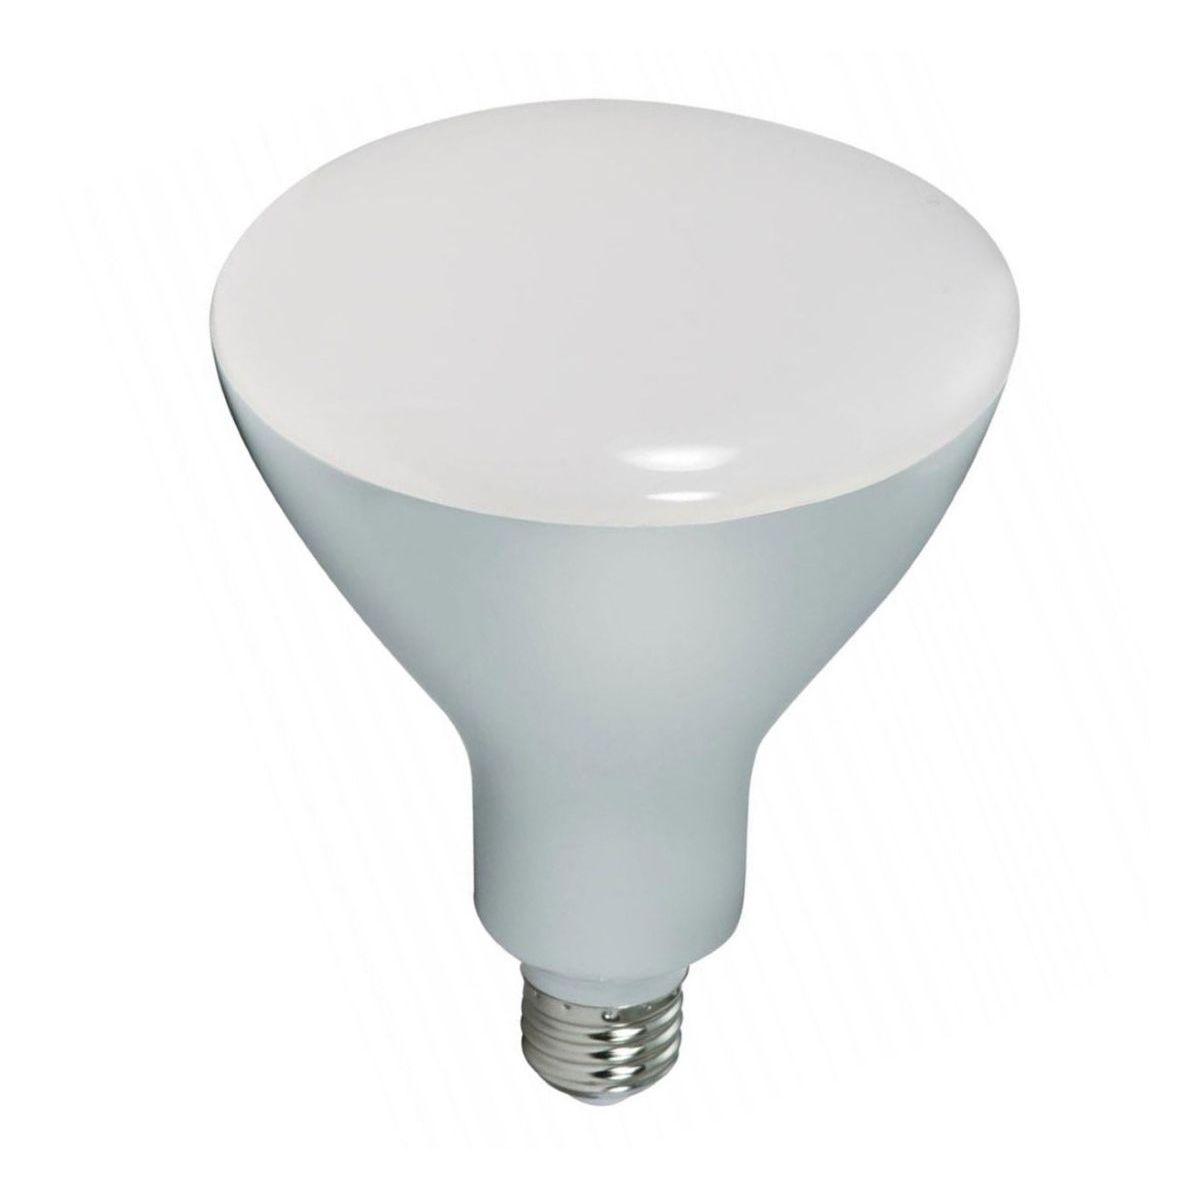 LED R40/BR40 Reflector bulb, 13 watt, 1075 Lumens, 5000K, E26 Medium Base, 103 Deg. Flood - Bees Lighting